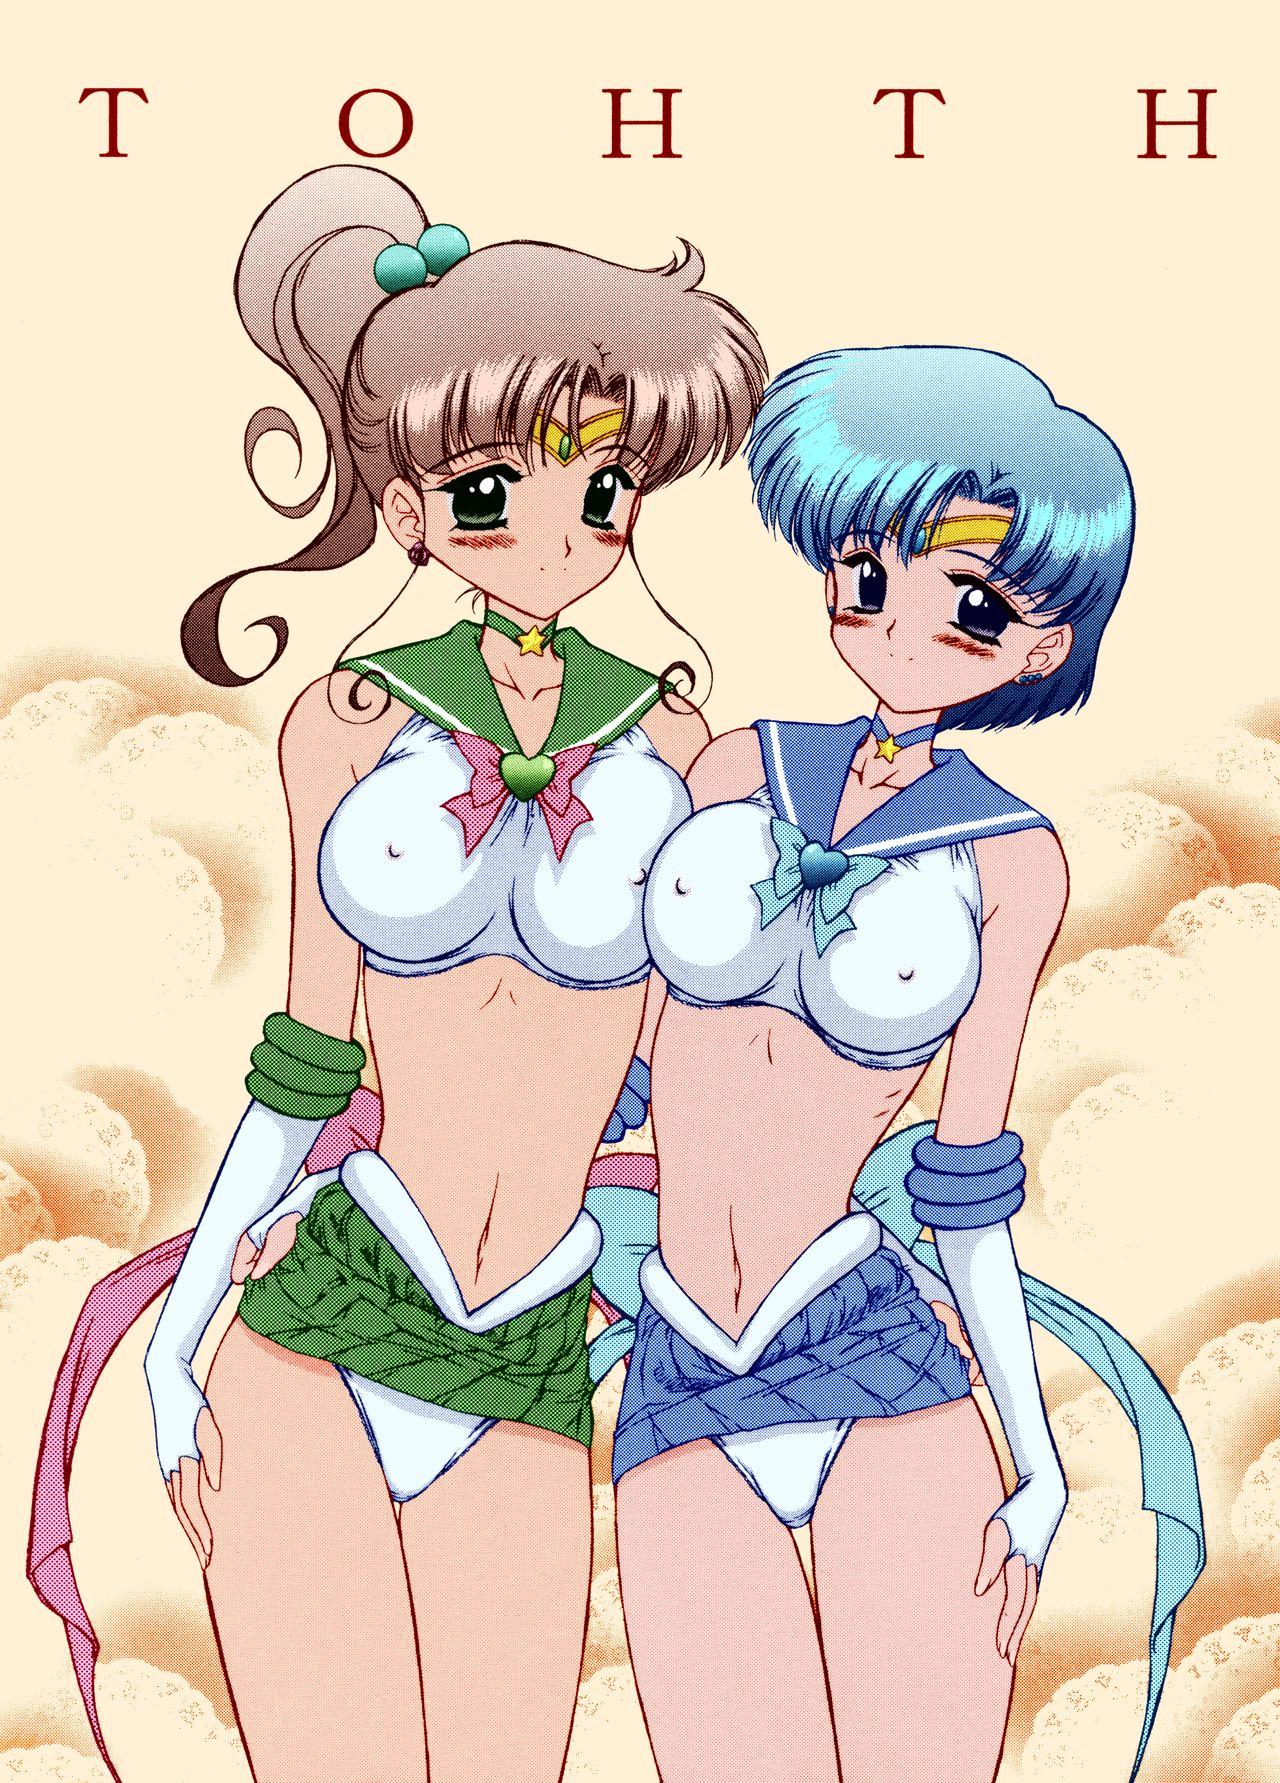 Big Cocks Tohth - Sailor moon Soft - Picture 1